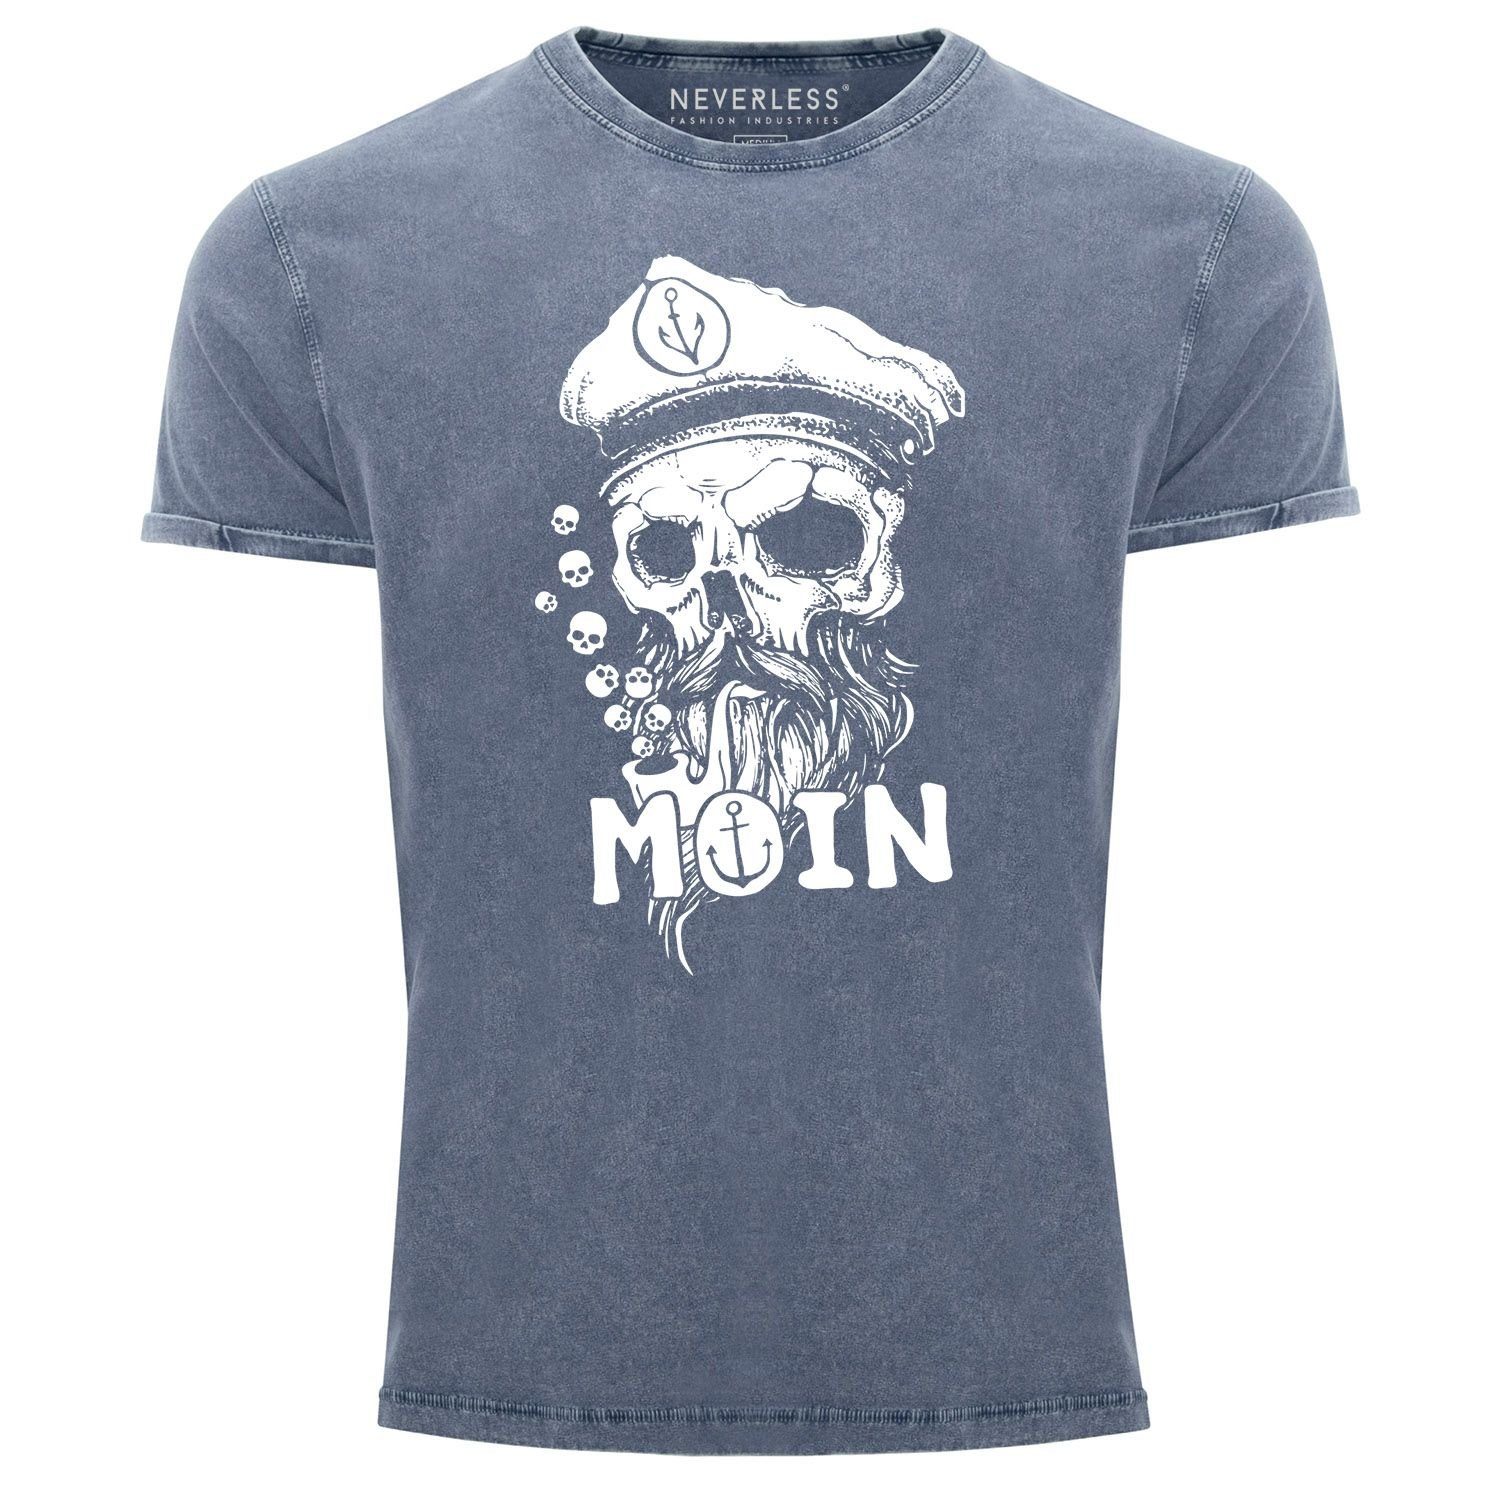 Moin T-Shirt Hamburg Neverless® Look mit Print Print-Shirt Neverless Bart Printshirt Used Aufdruck Totenkopf Vintage blau Kapitän Anker Herren Shirt